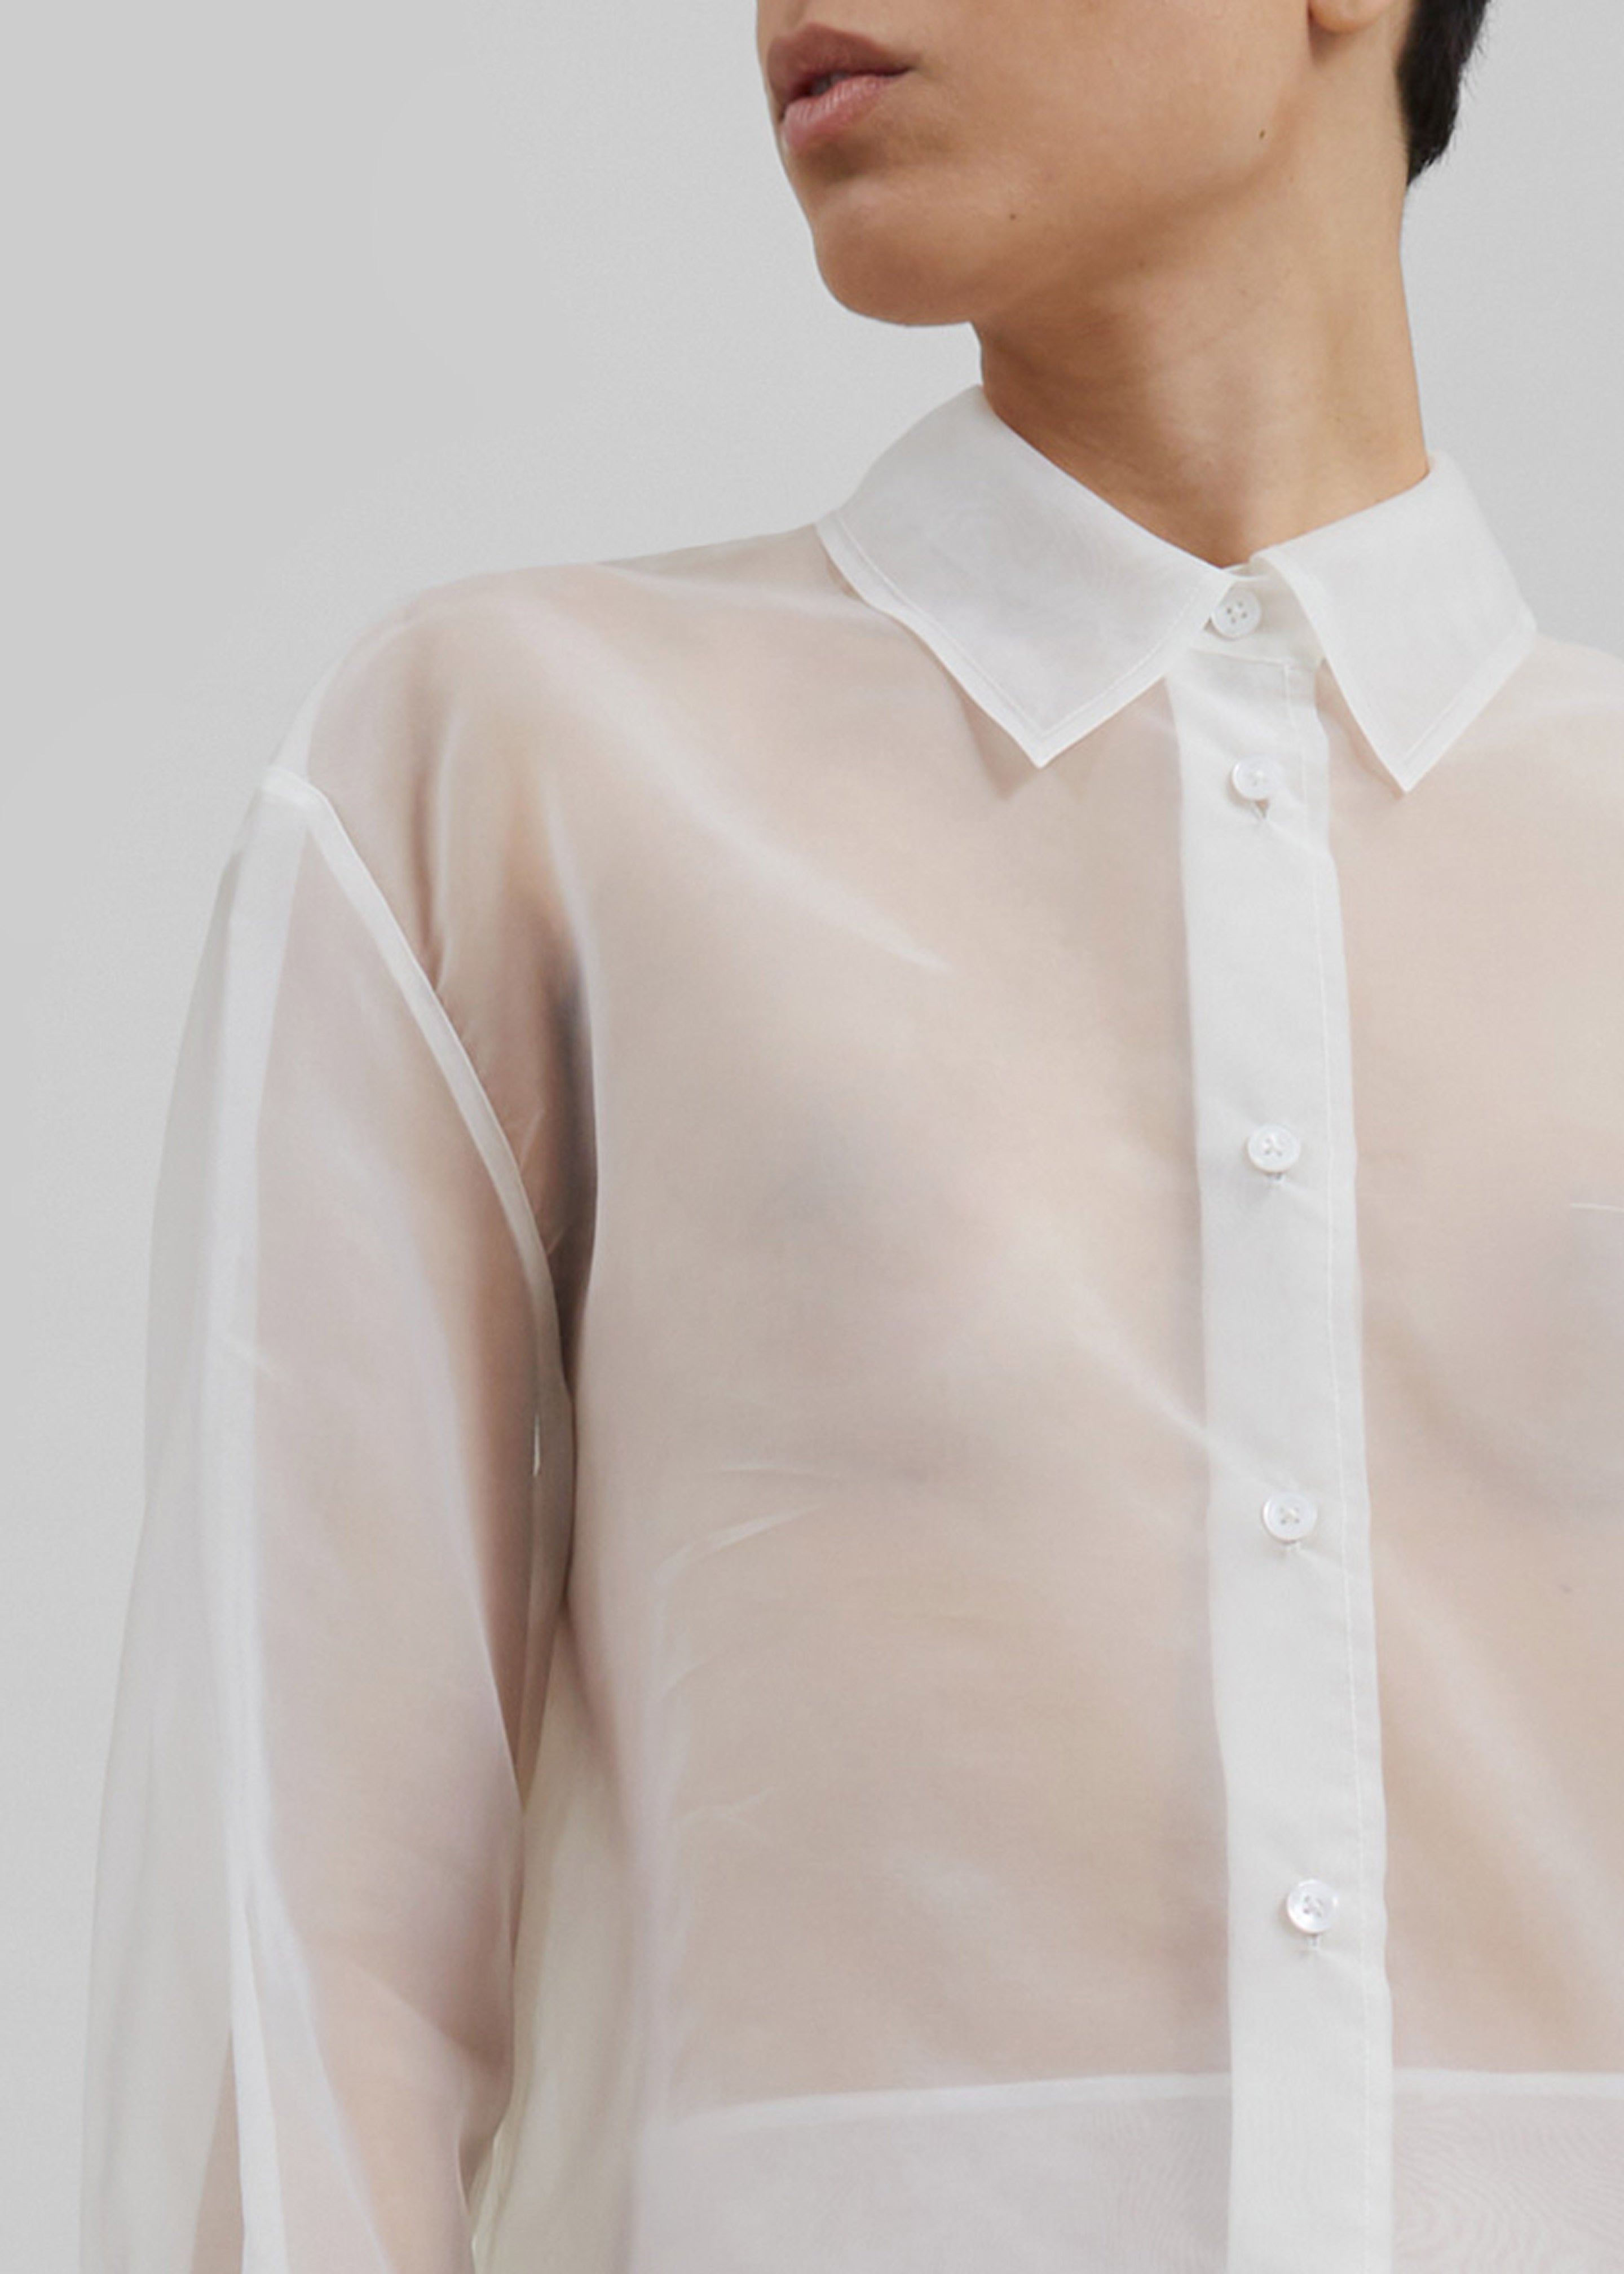 Peri Sheer Shirt - White - 5